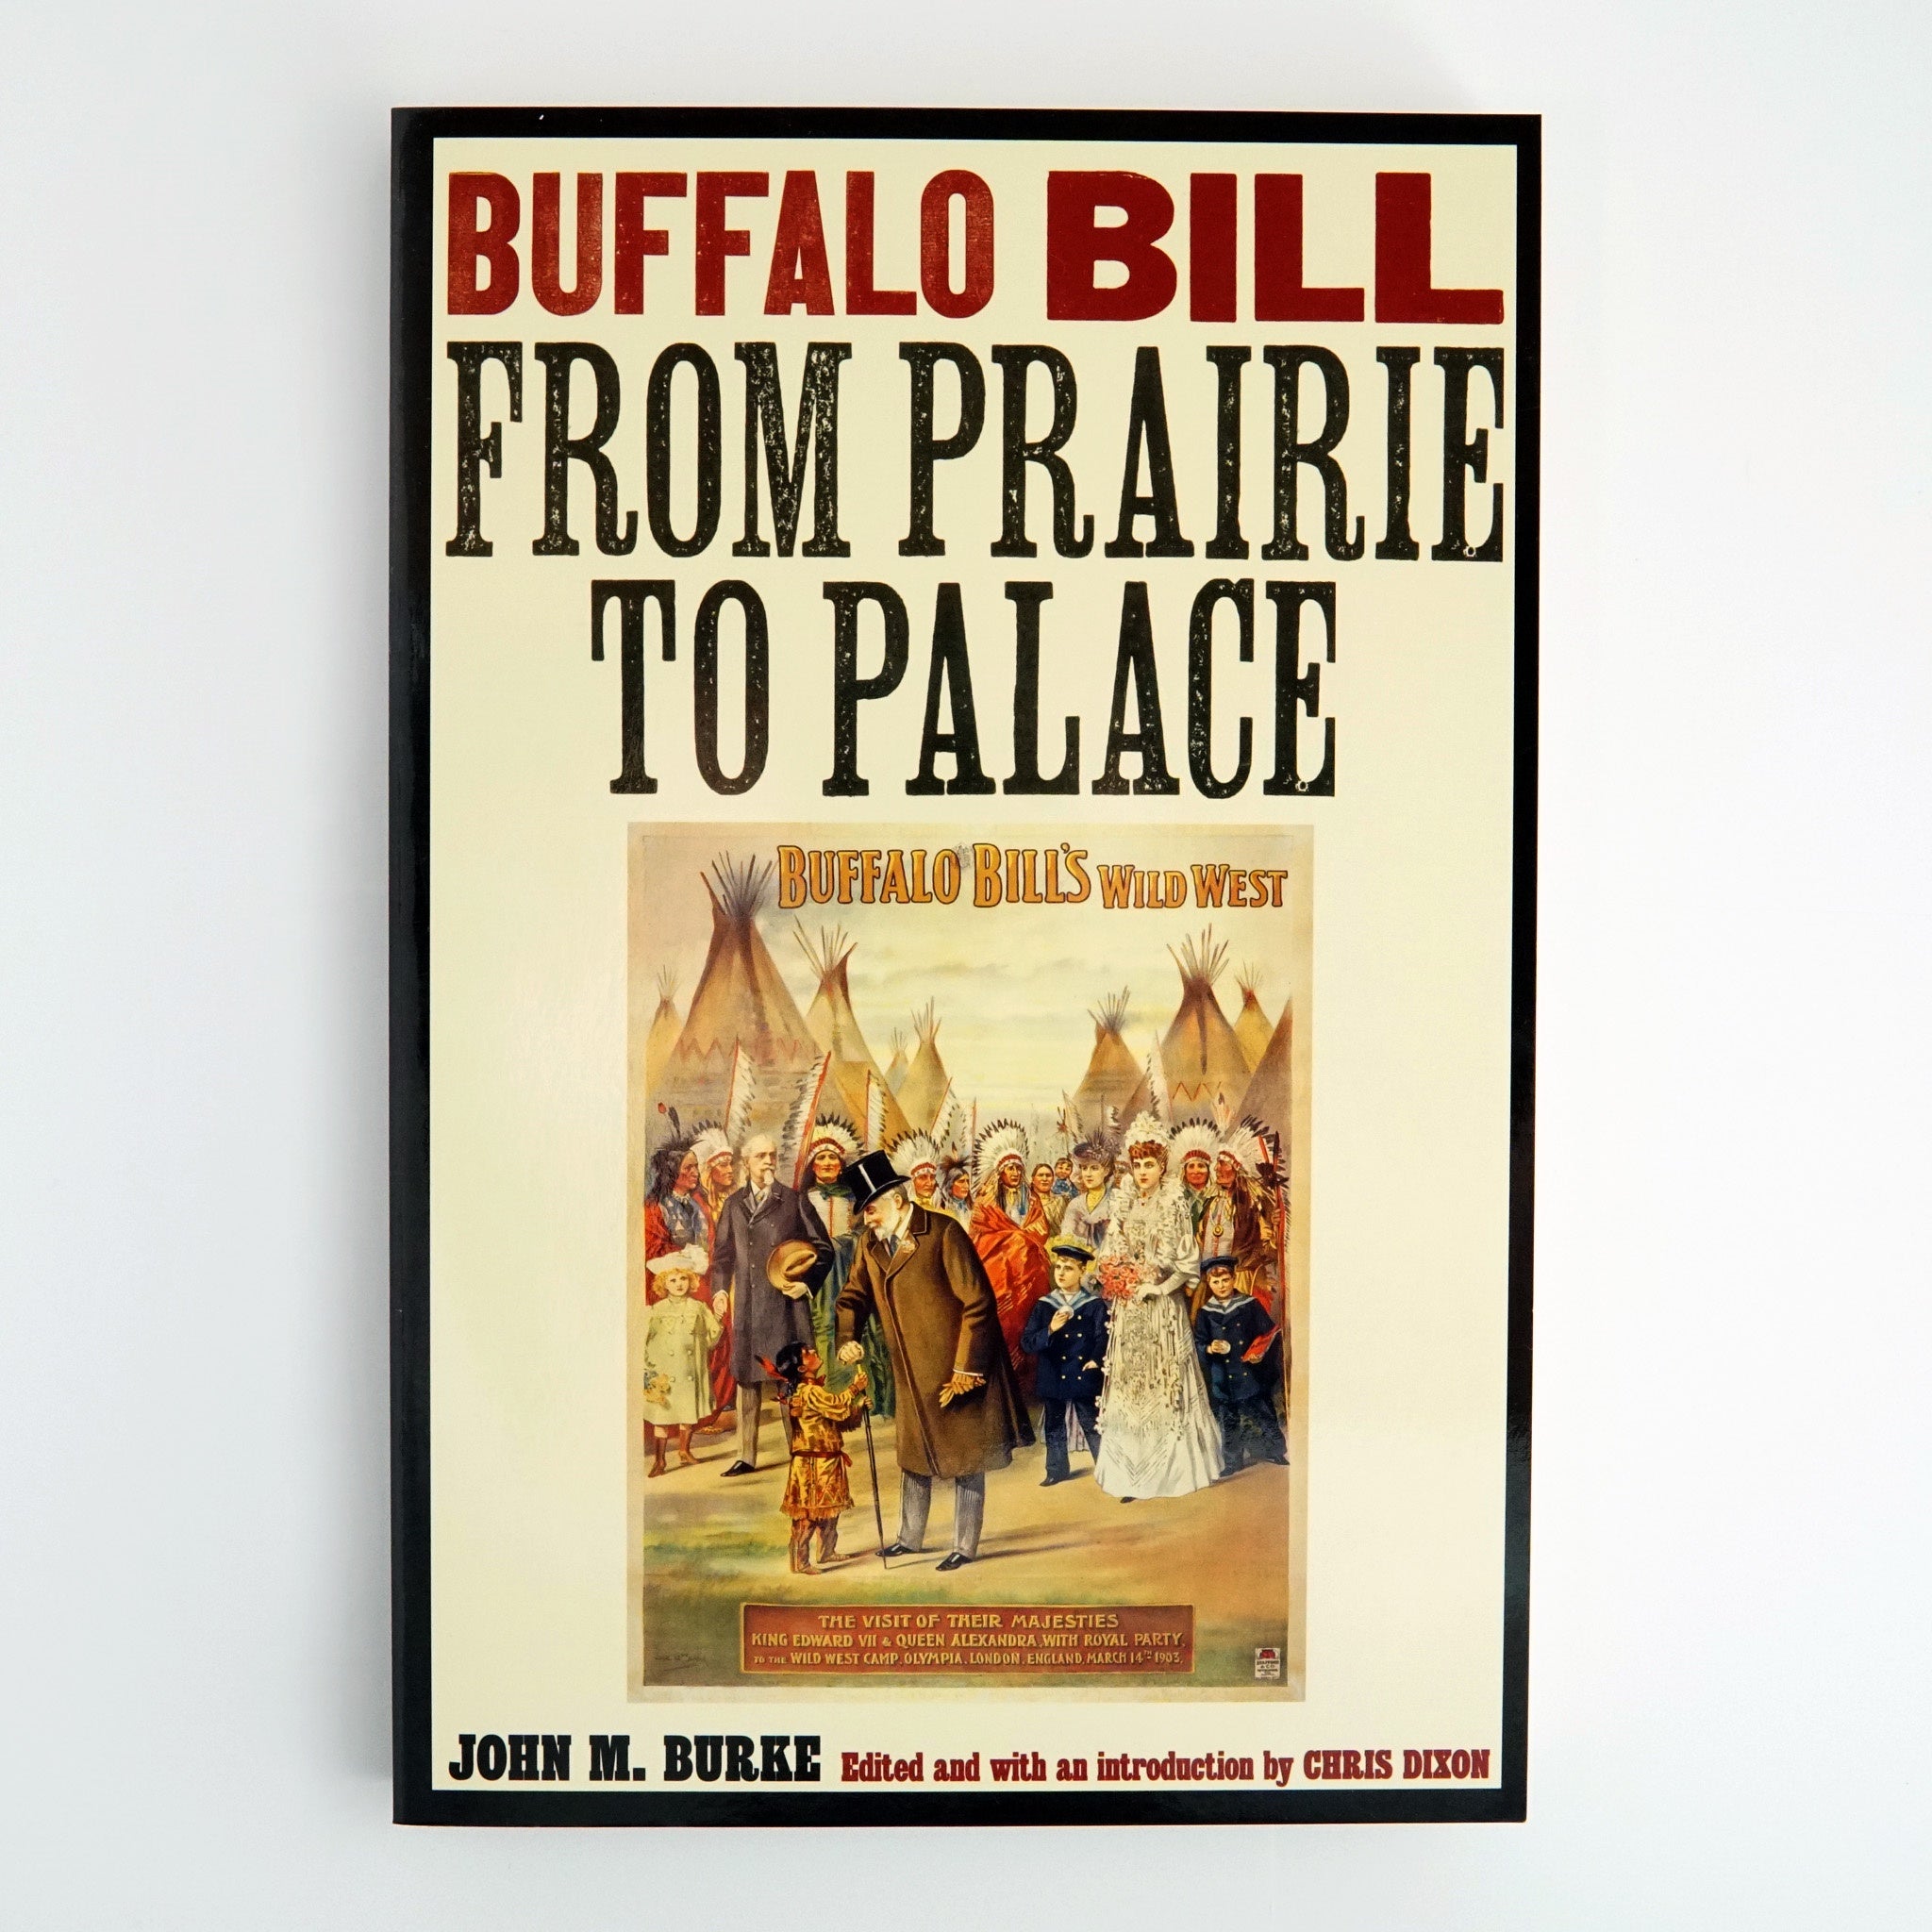 BK 1 BUFFALO BILL FROM PRAIRIE TO PALACE BY JOHN M. BURKE #21034697 D2 MAR24